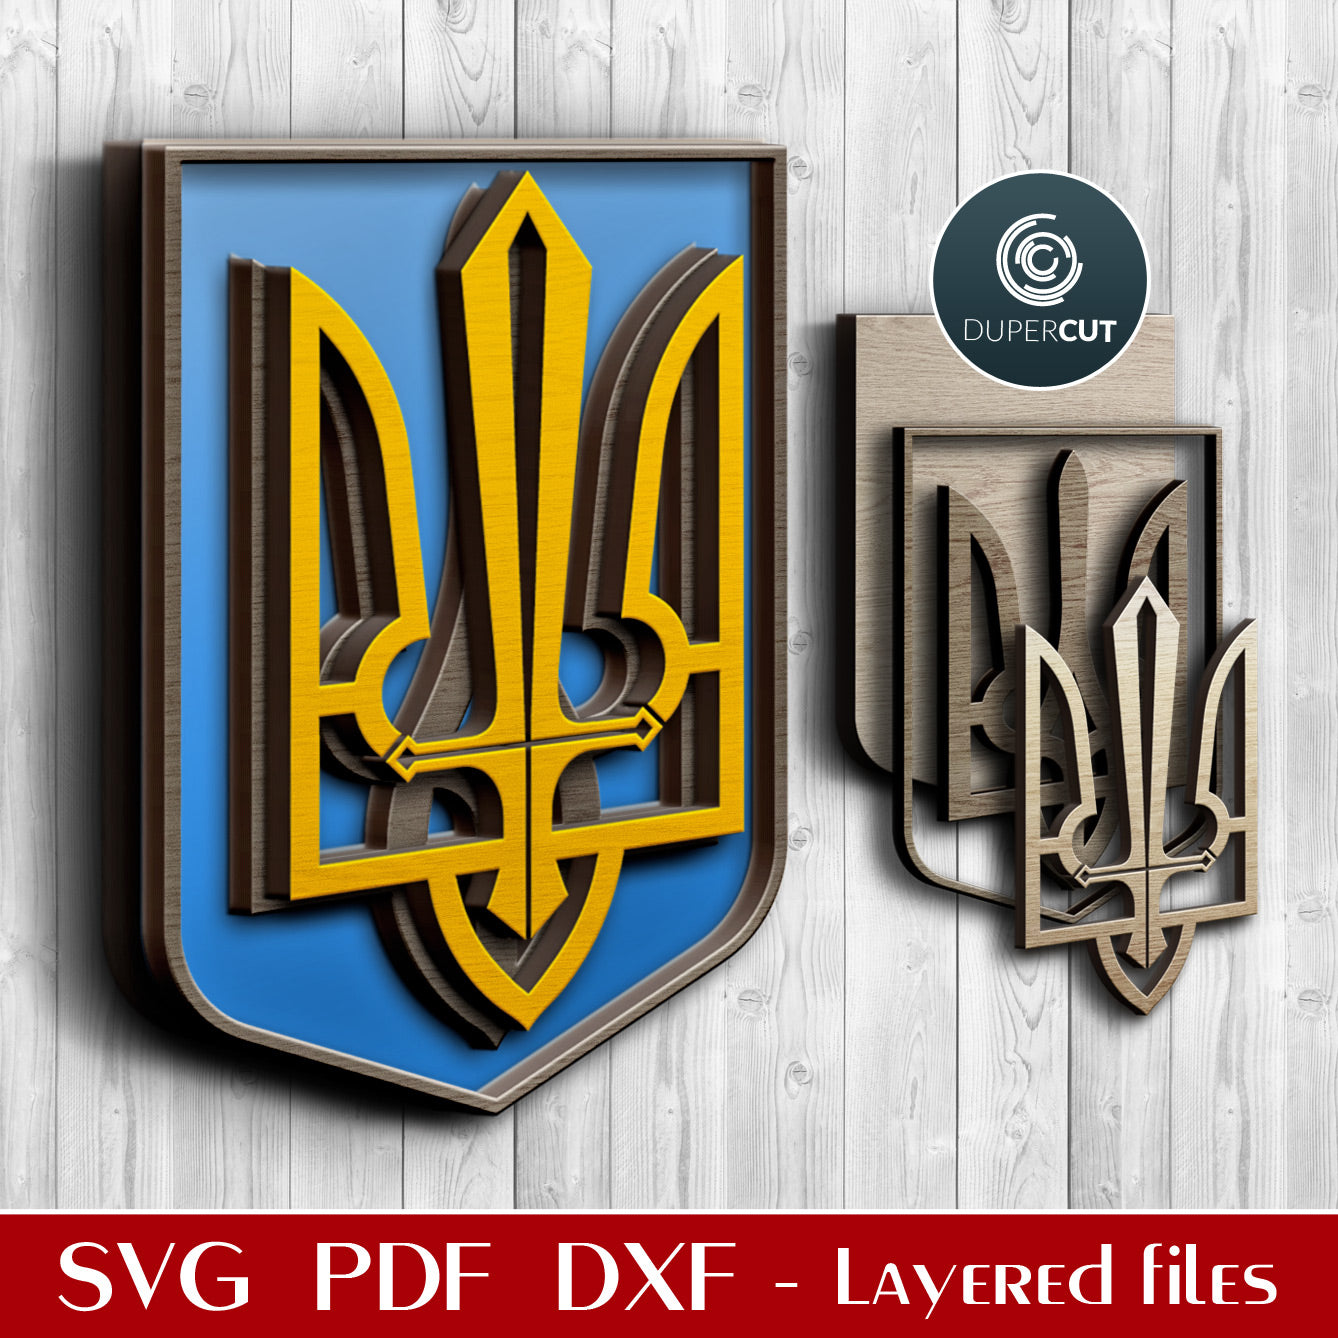 Ukrainian Trident Coat of Arms of Ukraine - SVG PDF DXF layered laser cutting files for Glowforge, Cricut, Silhouette, CNC plasma laser cutting machines by DuperCut